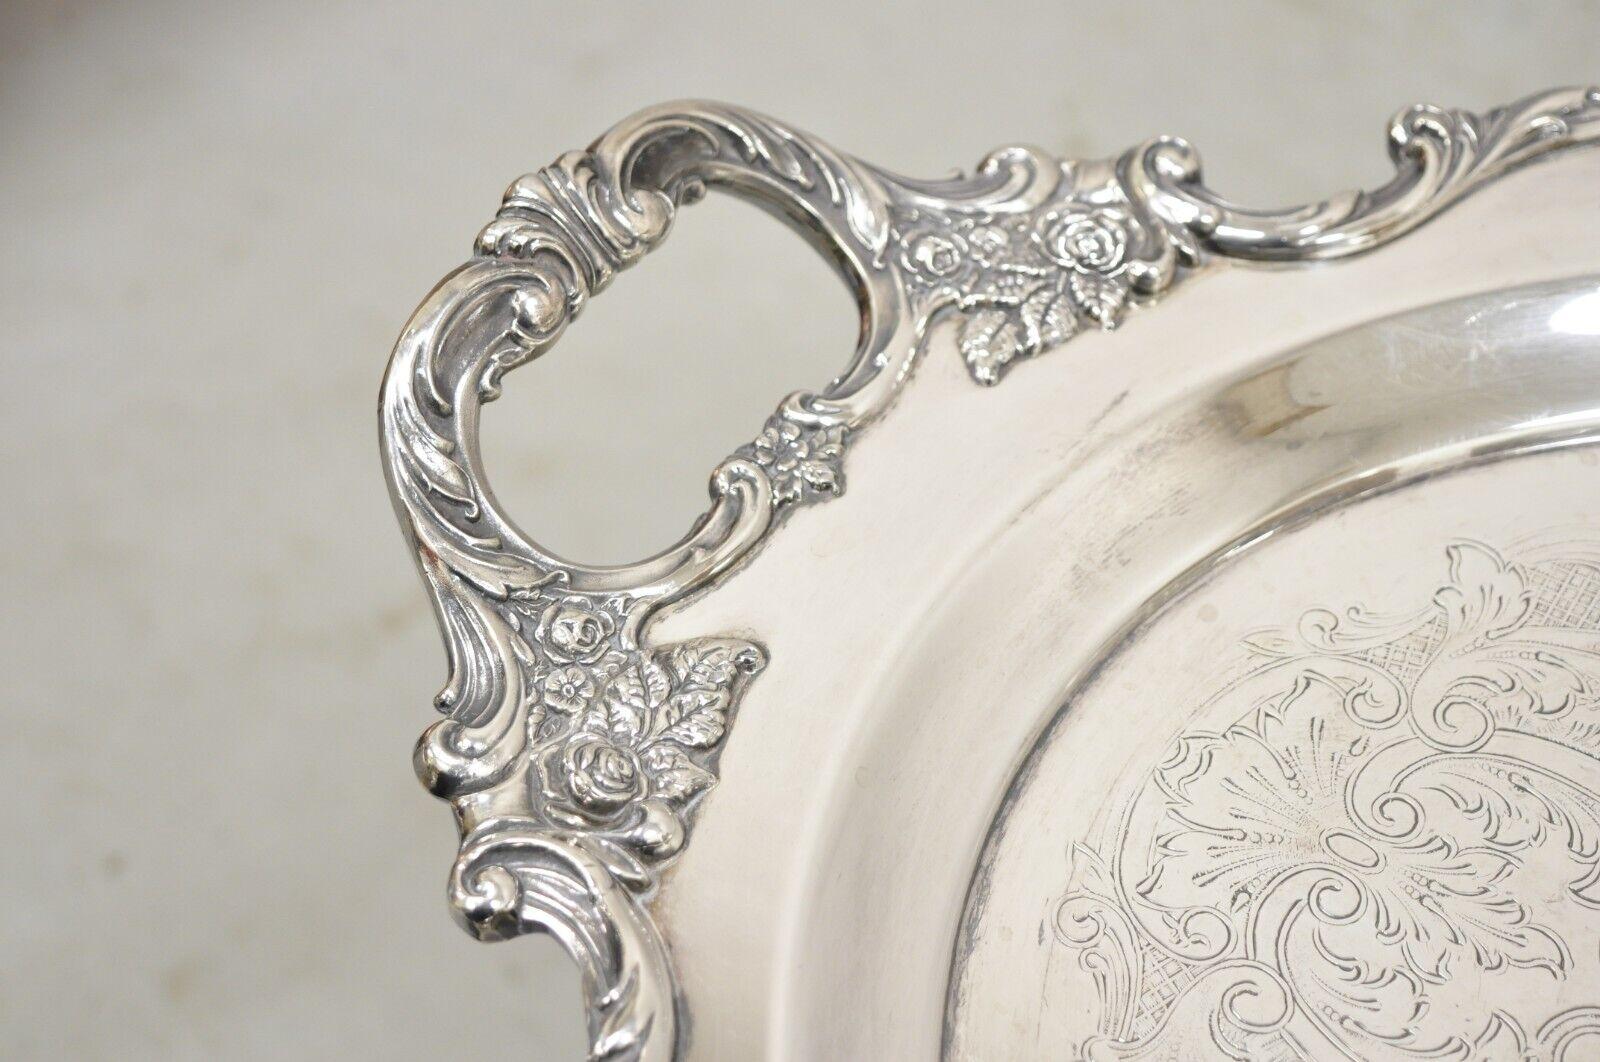 wallace silversmith tray 6438n value